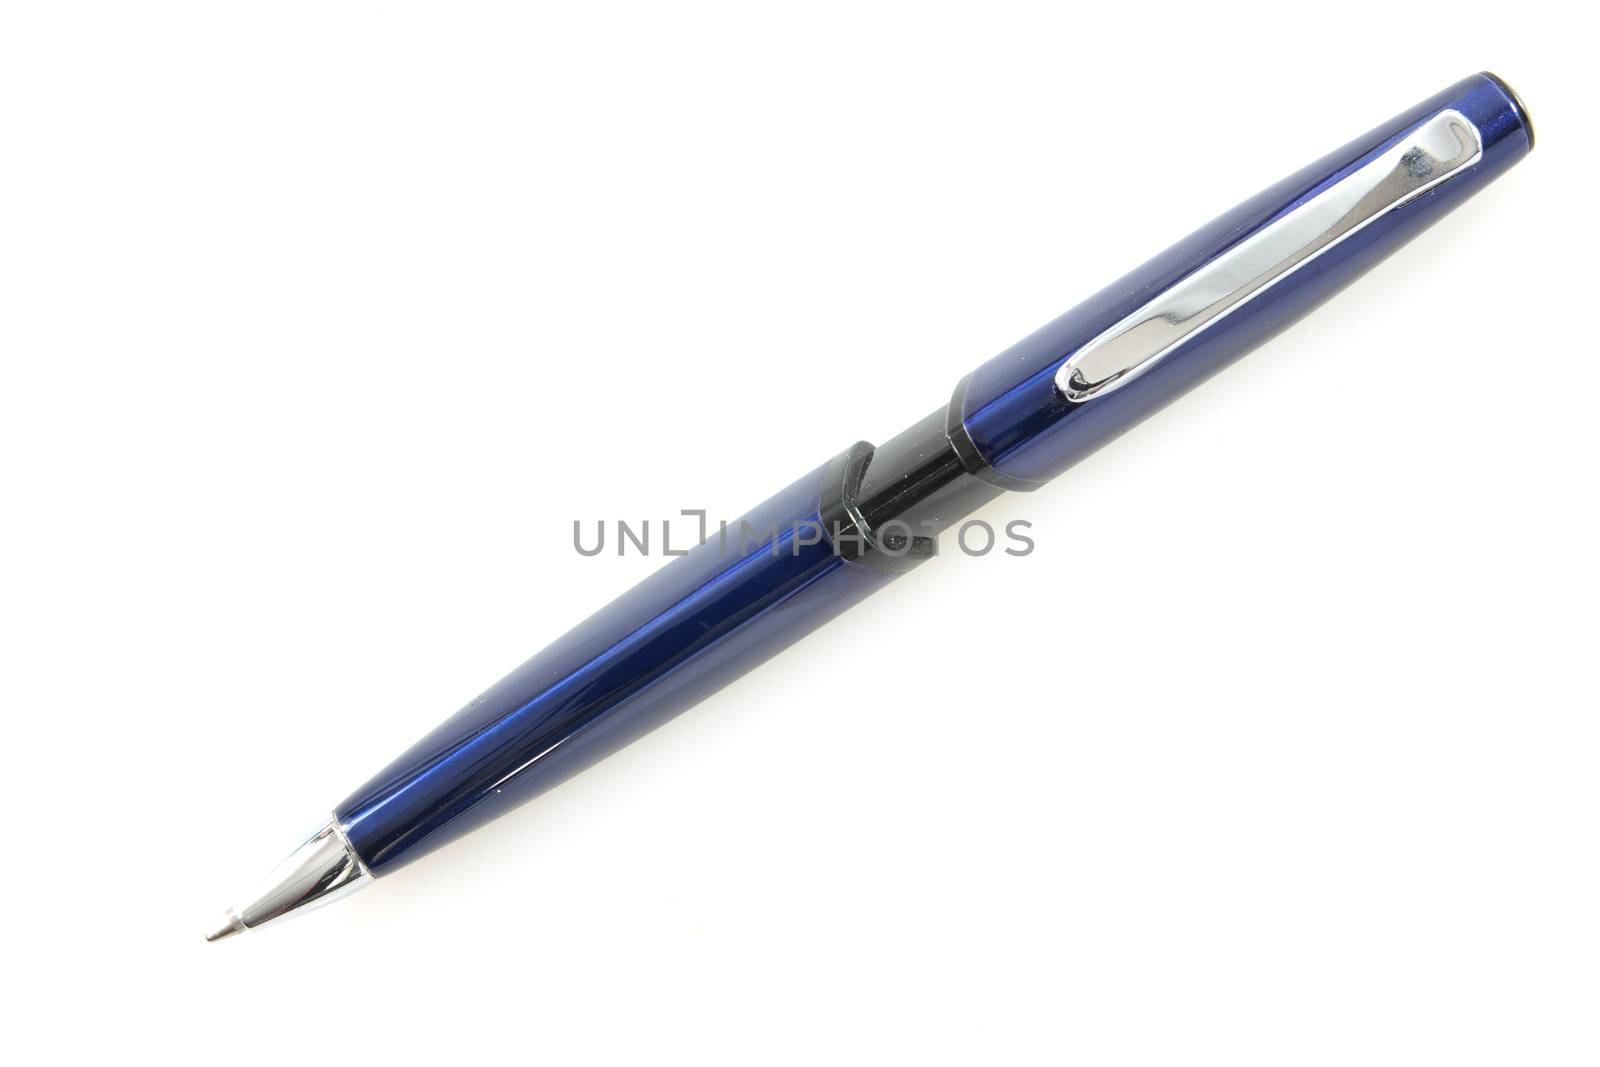 Plastic blue pen isolated on white background